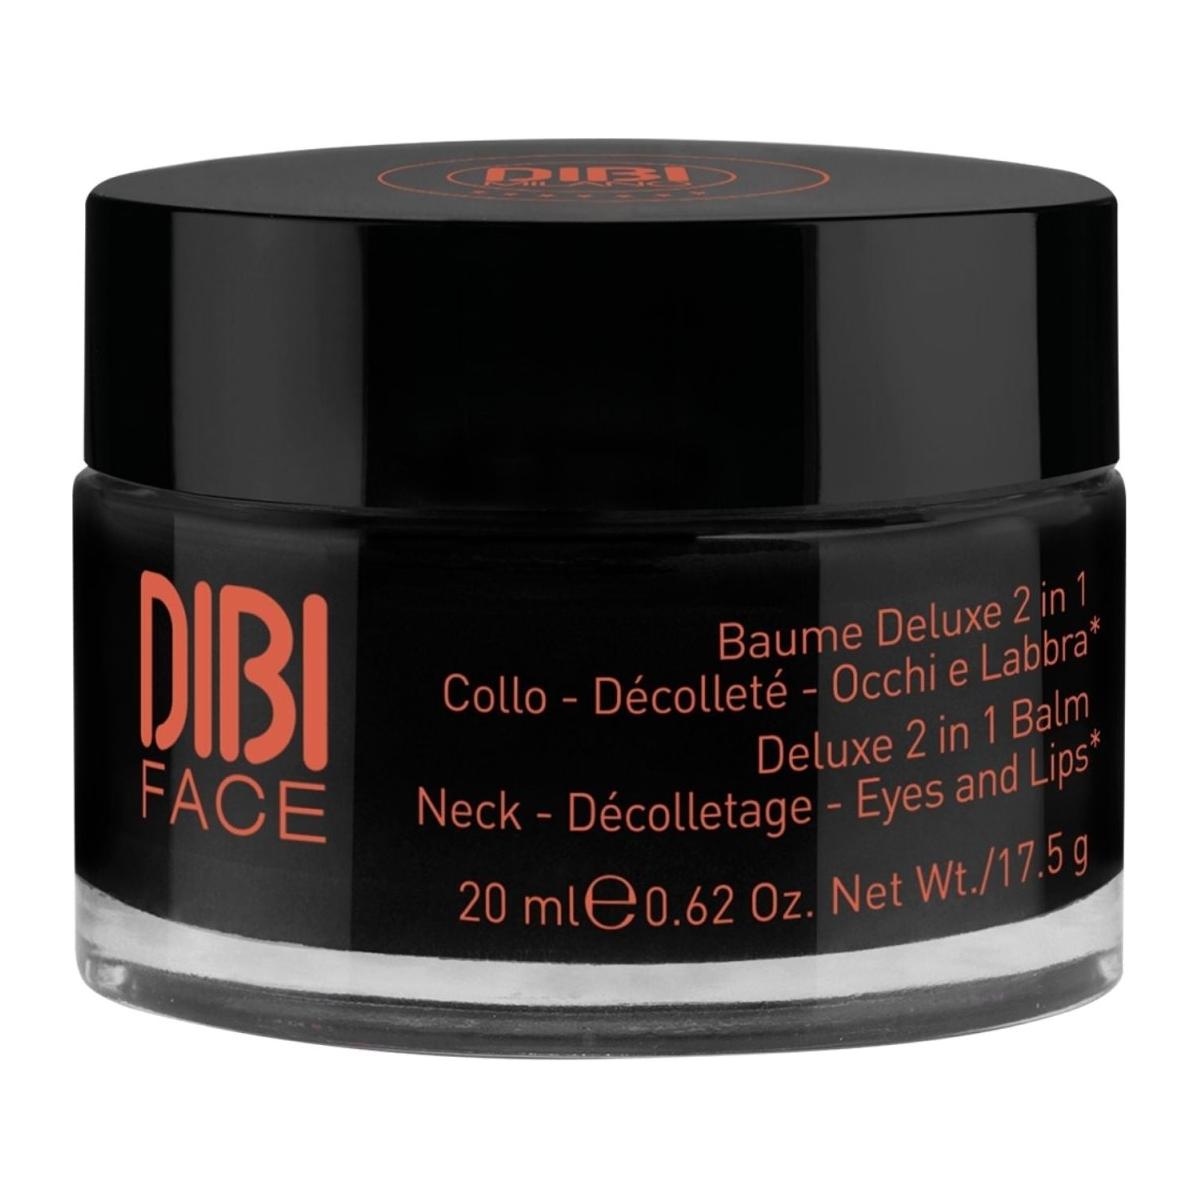 DIBI Milano | Age Method 2-in-1 Deluxe Baume Neck Decollete Eyes & Lips | 20ml - DG International Ventures Limited